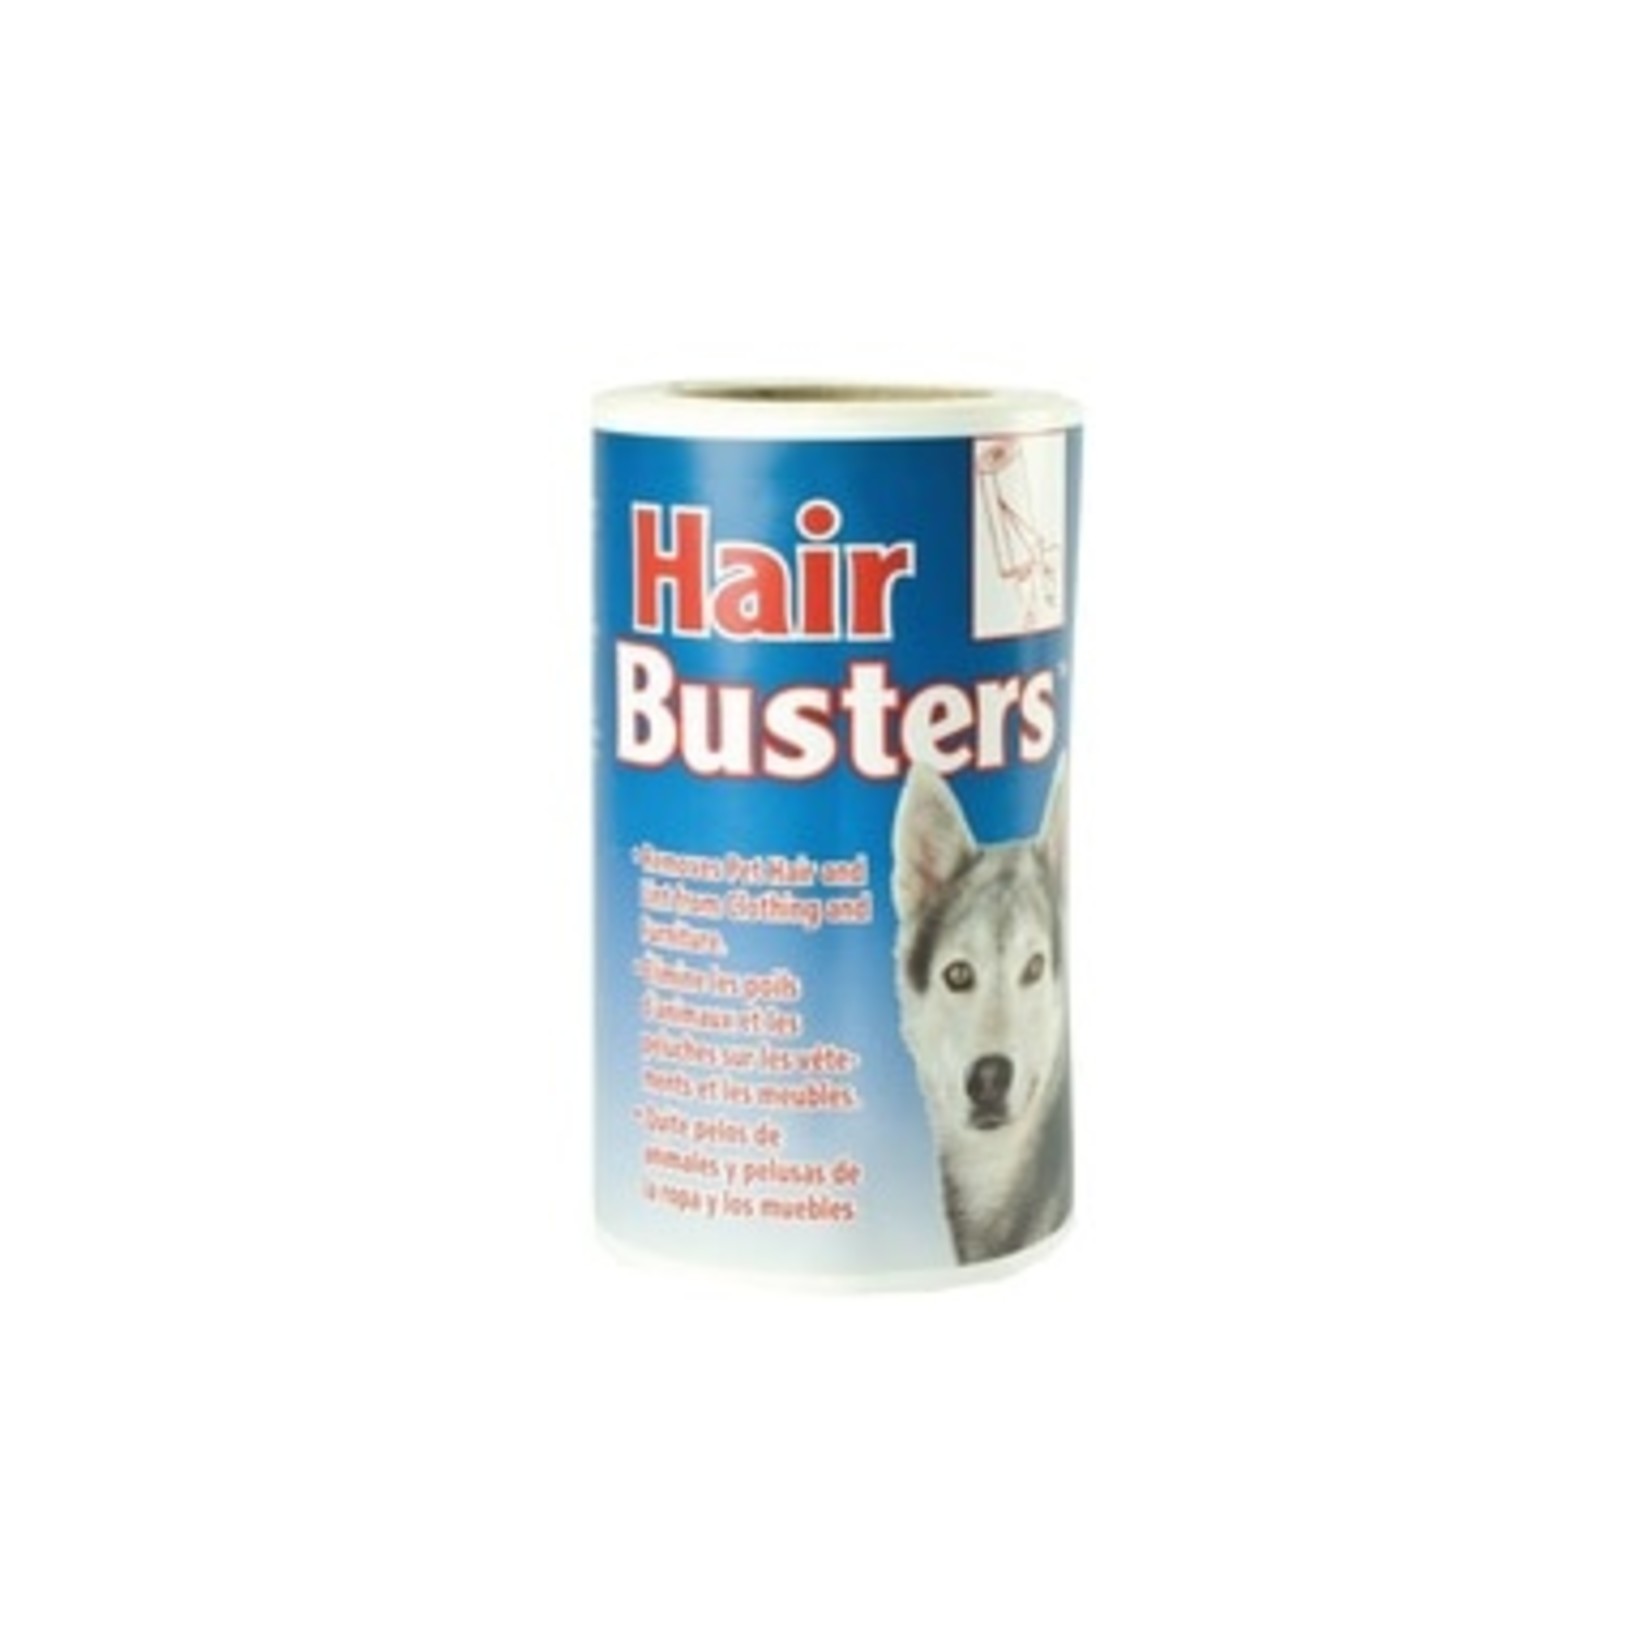 Hair Busters Pet Hair Lint Roller Refill 60 Sheets